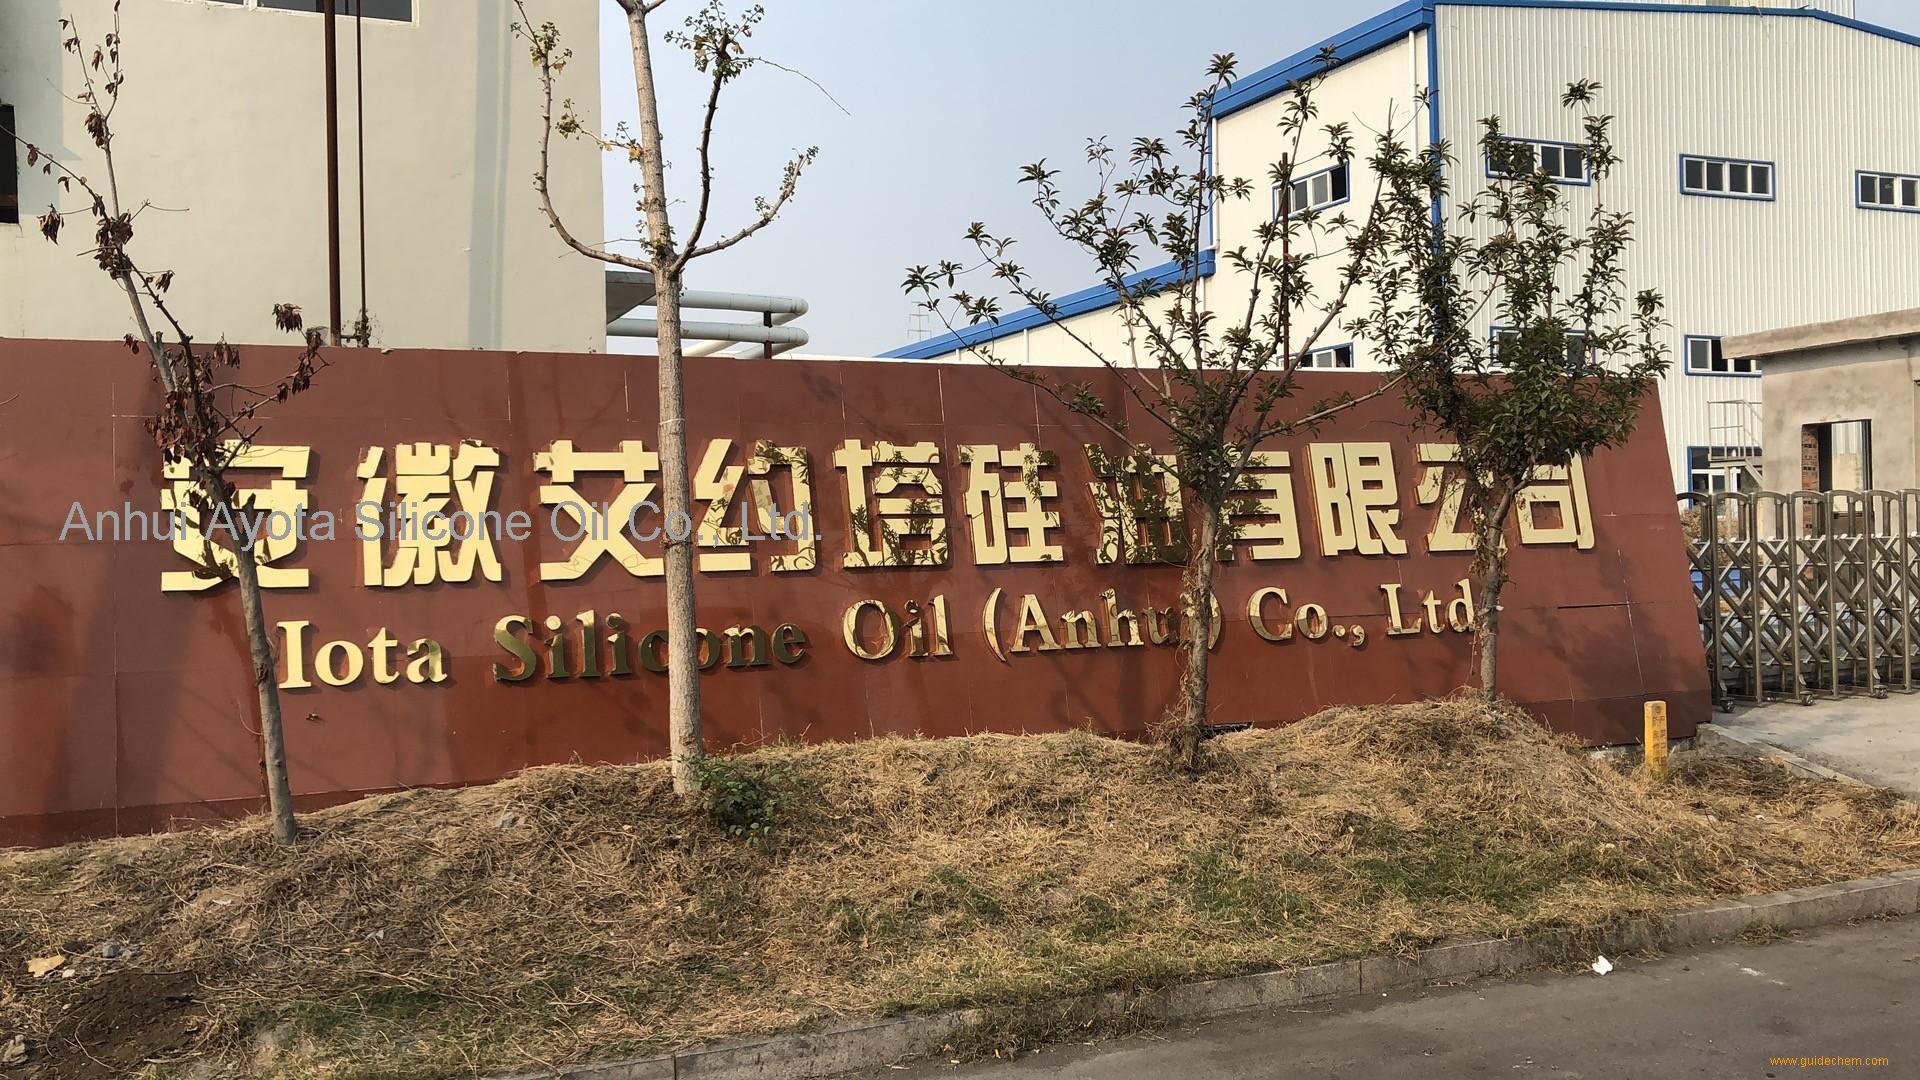 Iota Silicone Oil (Anhui) Co., Ltd